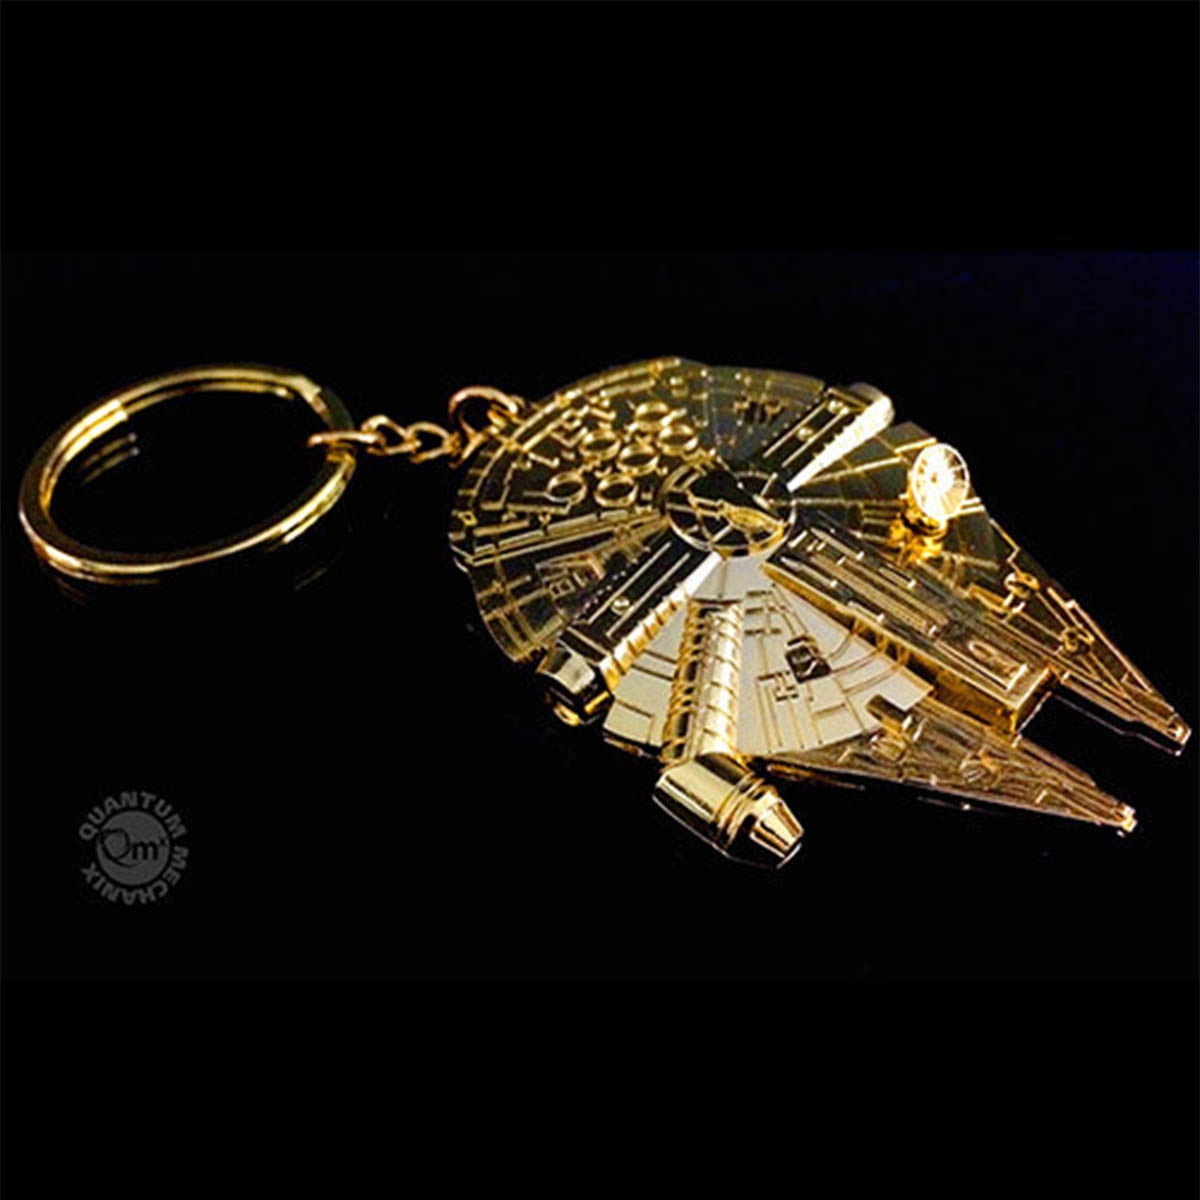 Star Wars Millennium Falcon Replica Key Chain 2 Sided New Celebration 